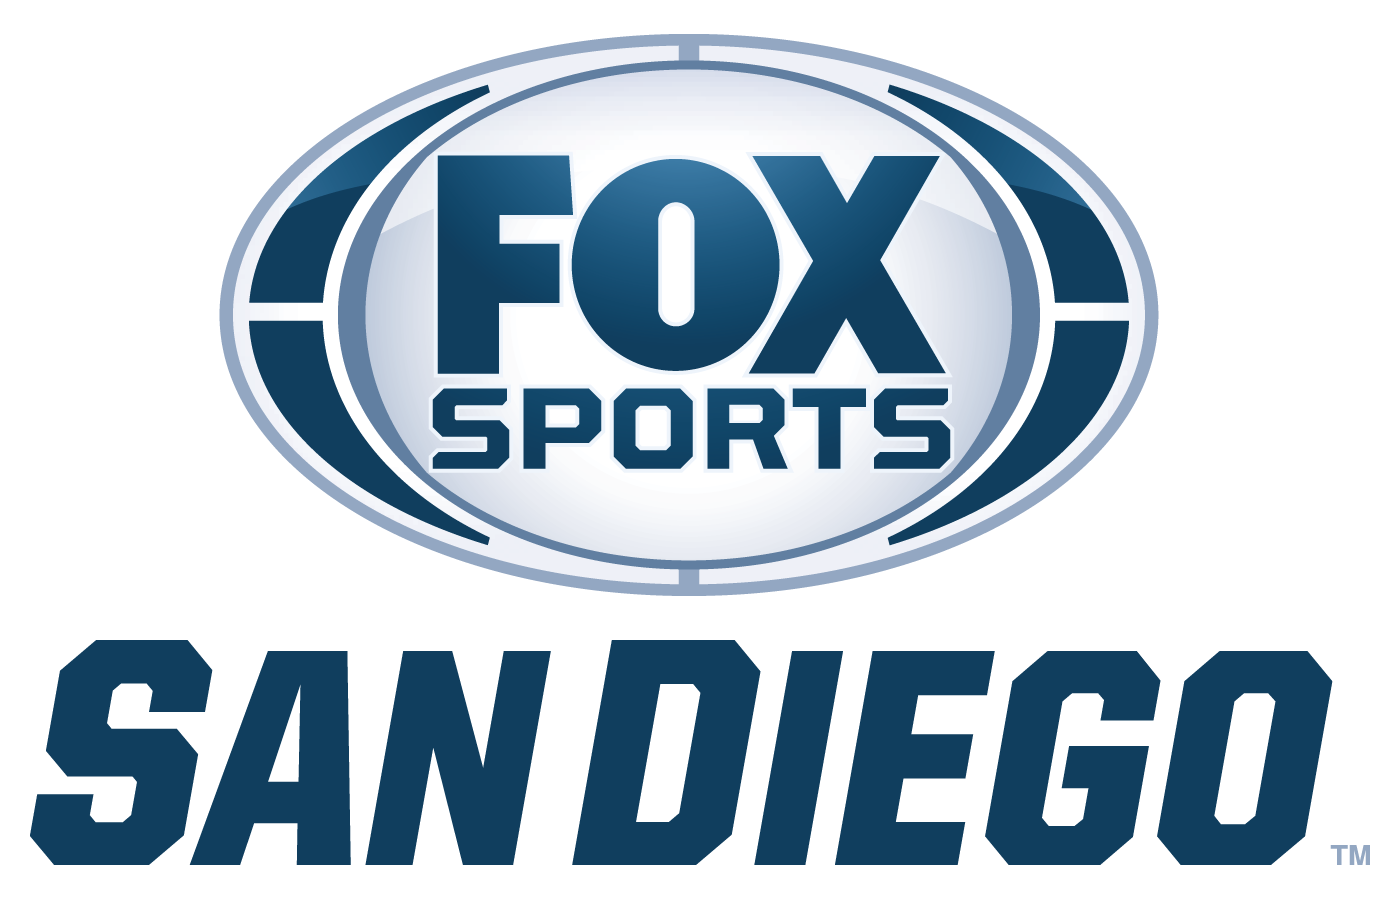 San Diego Padres - Wikipedia